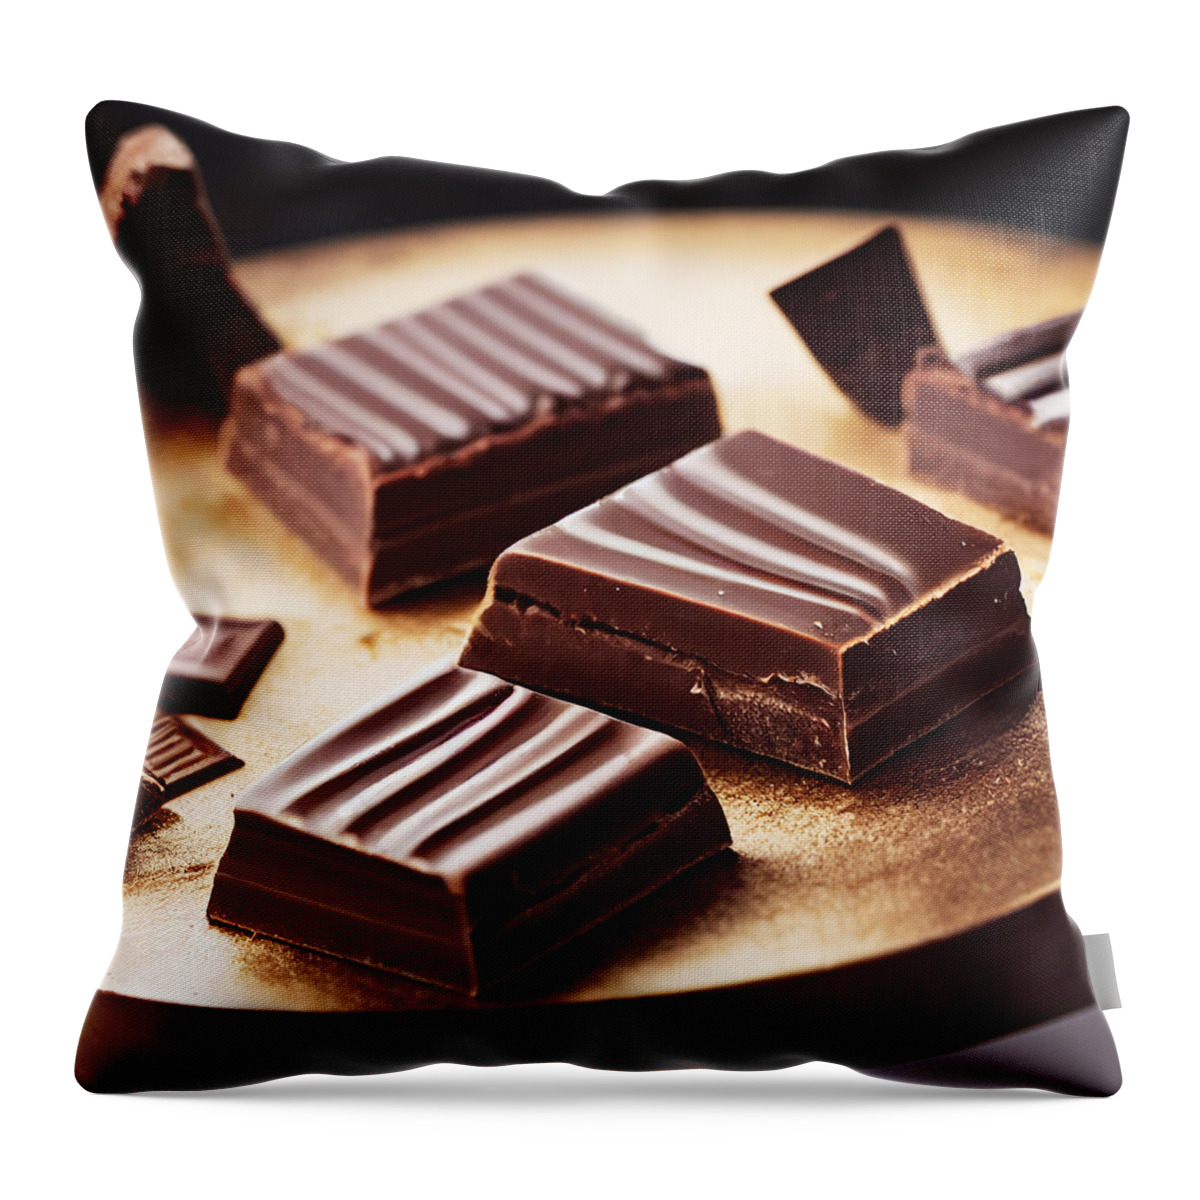 Hazlenut Chocolates On Gold Platter Throw Pillow featuring the digital art Hazlenut Chocolates On Gold Platter by Craig Boehman